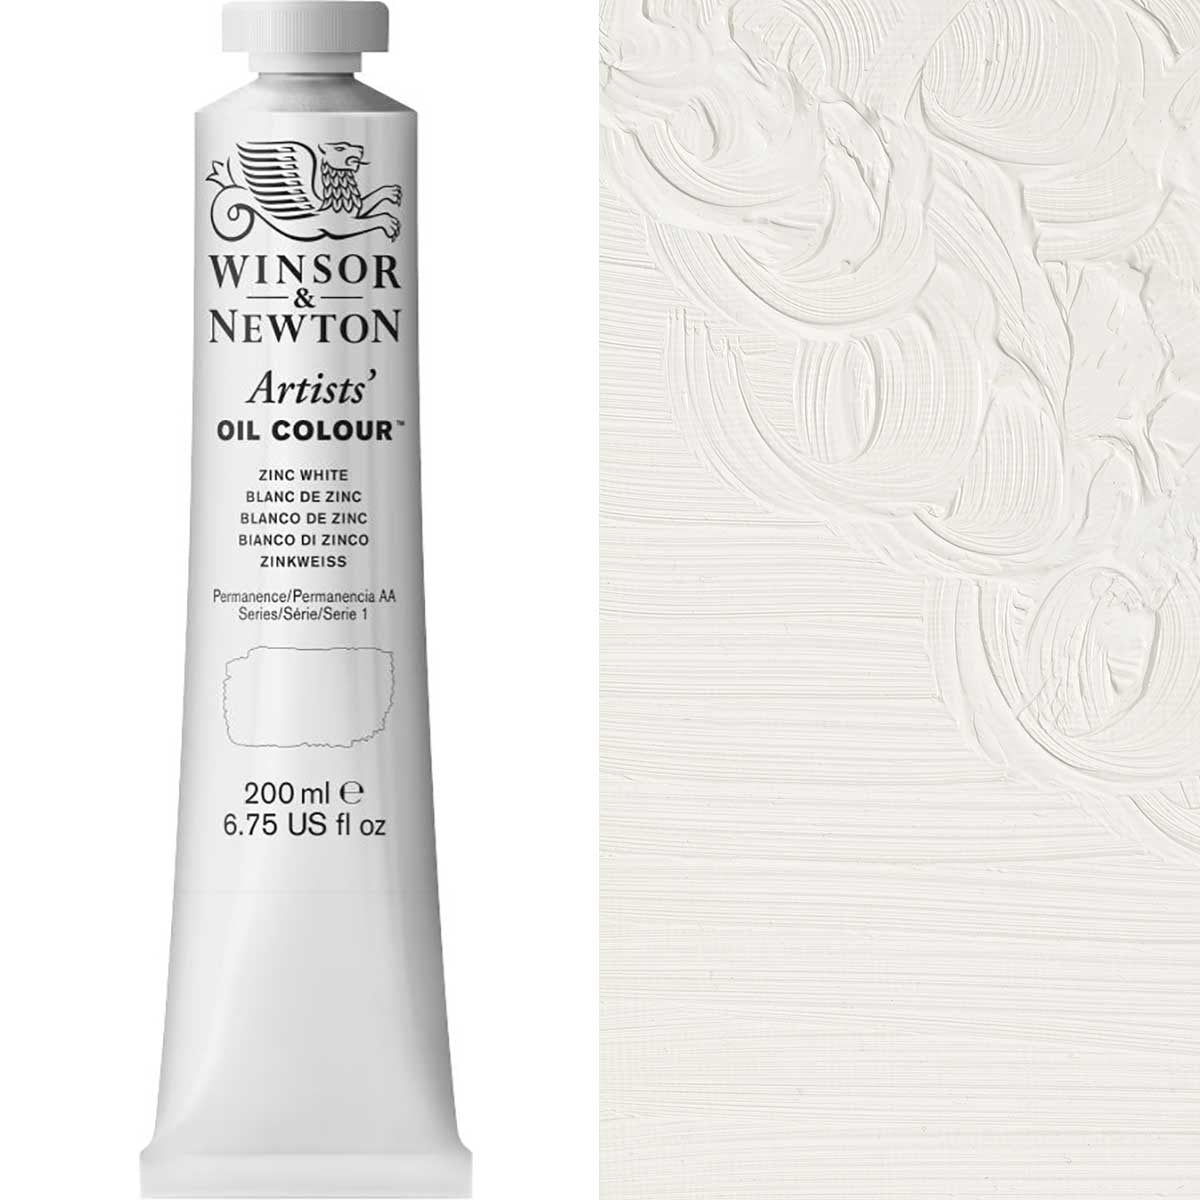 Winsor and Newton - Artists' Oil Colour - 200ml - Zinc White